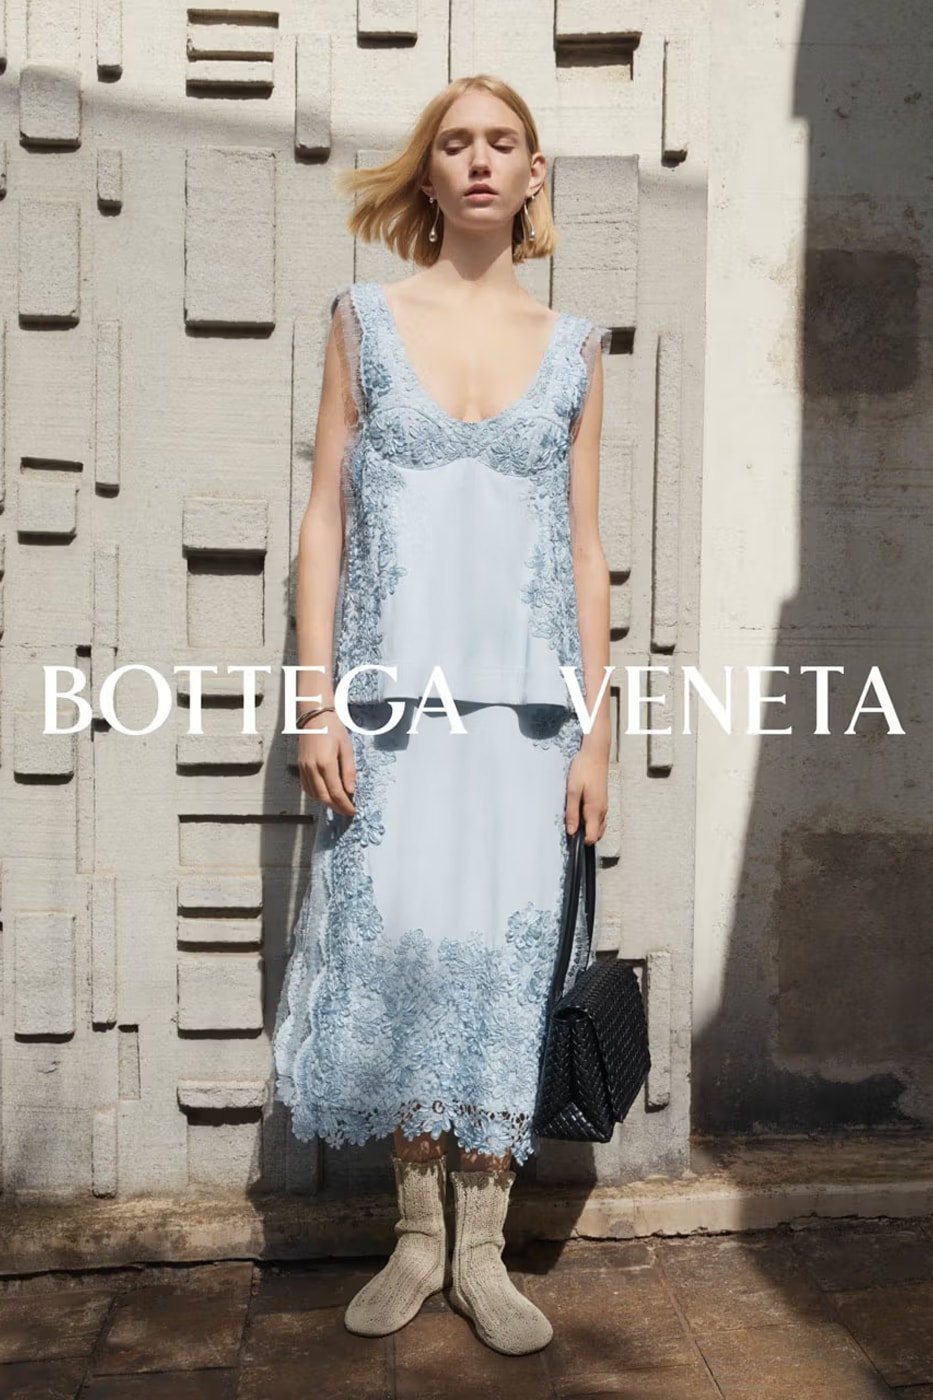 Inside Matthieu Blazy's Renovation of Bottega Veneta